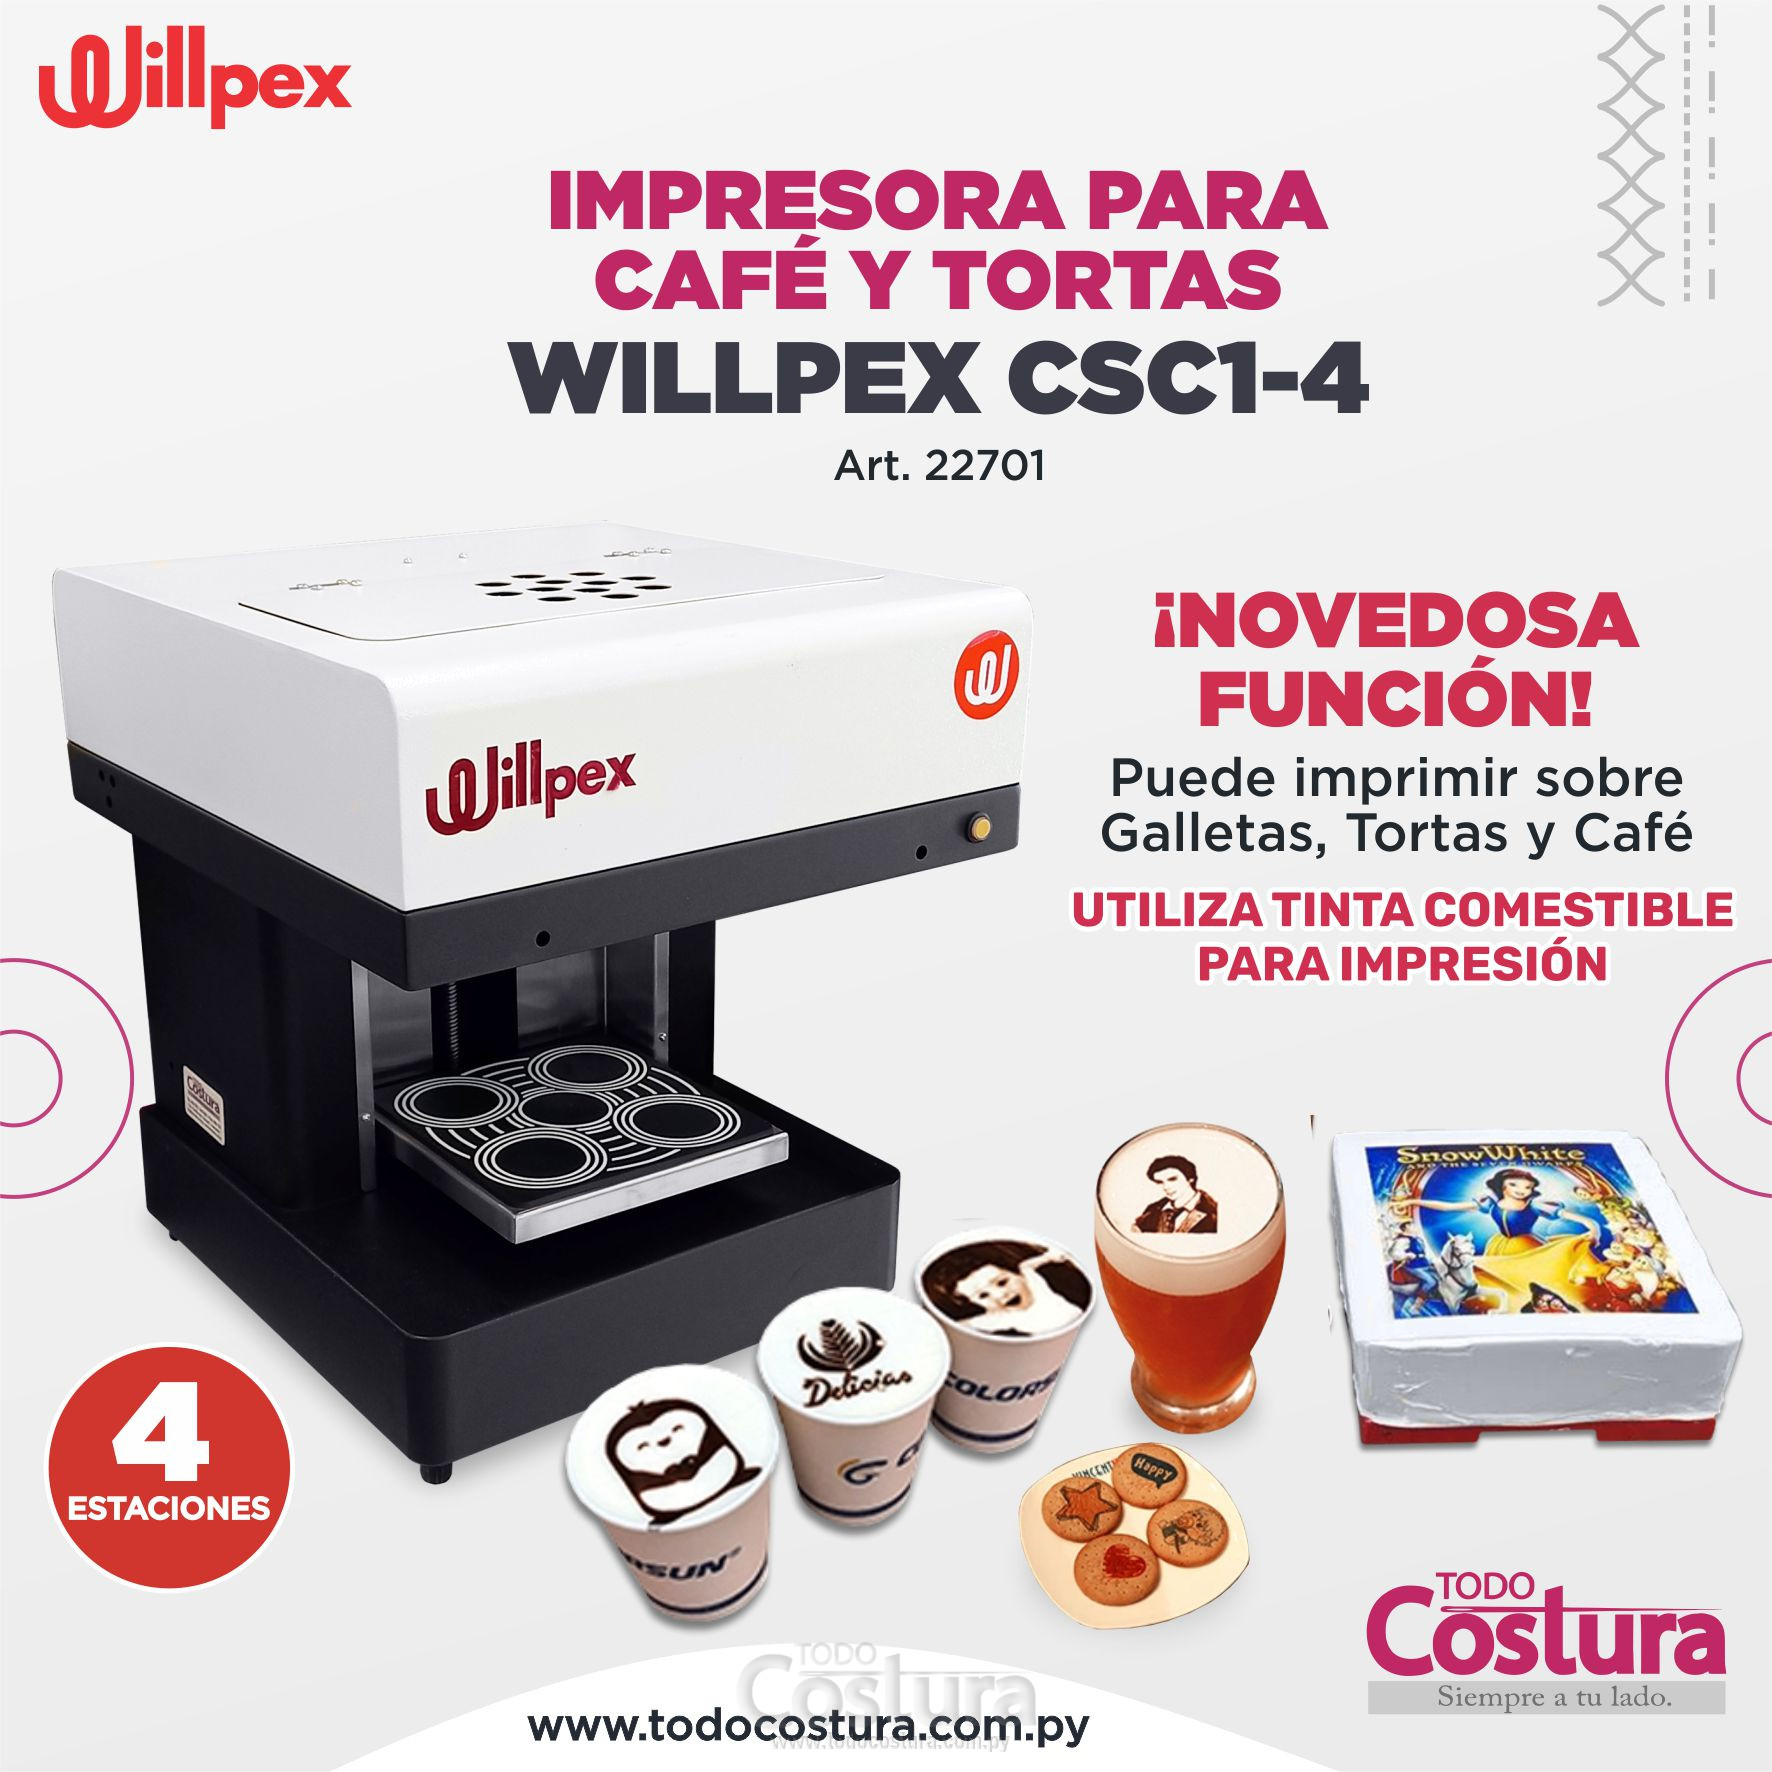 IMPRESORA PARA TORTAS / CAFE (4 ESTACIONES) WILLPEX CSC1-4